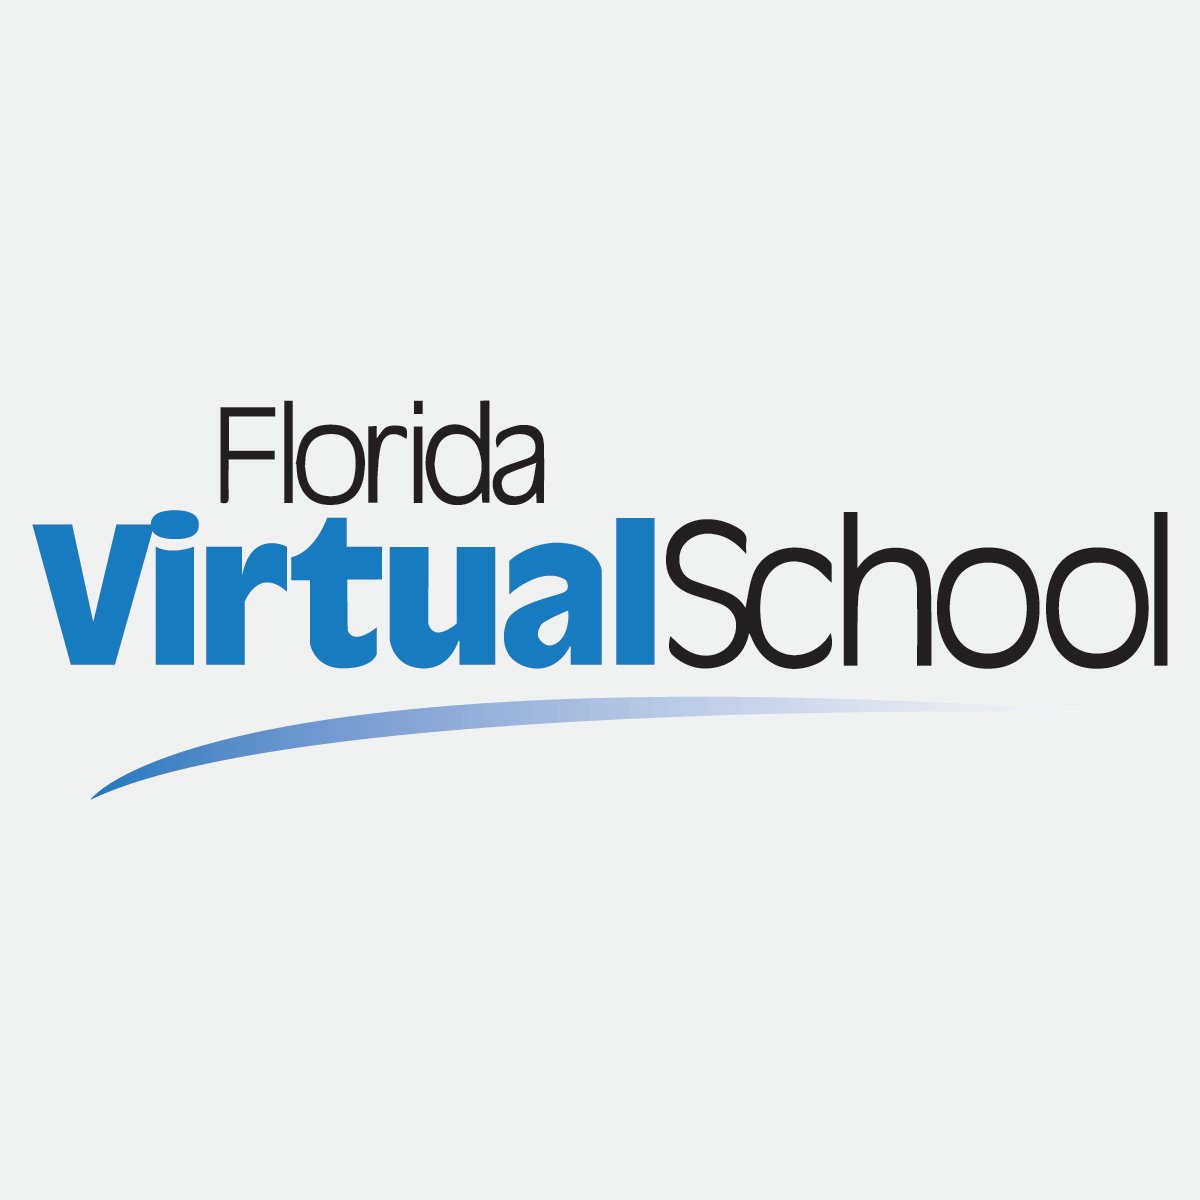 Florida virtual school